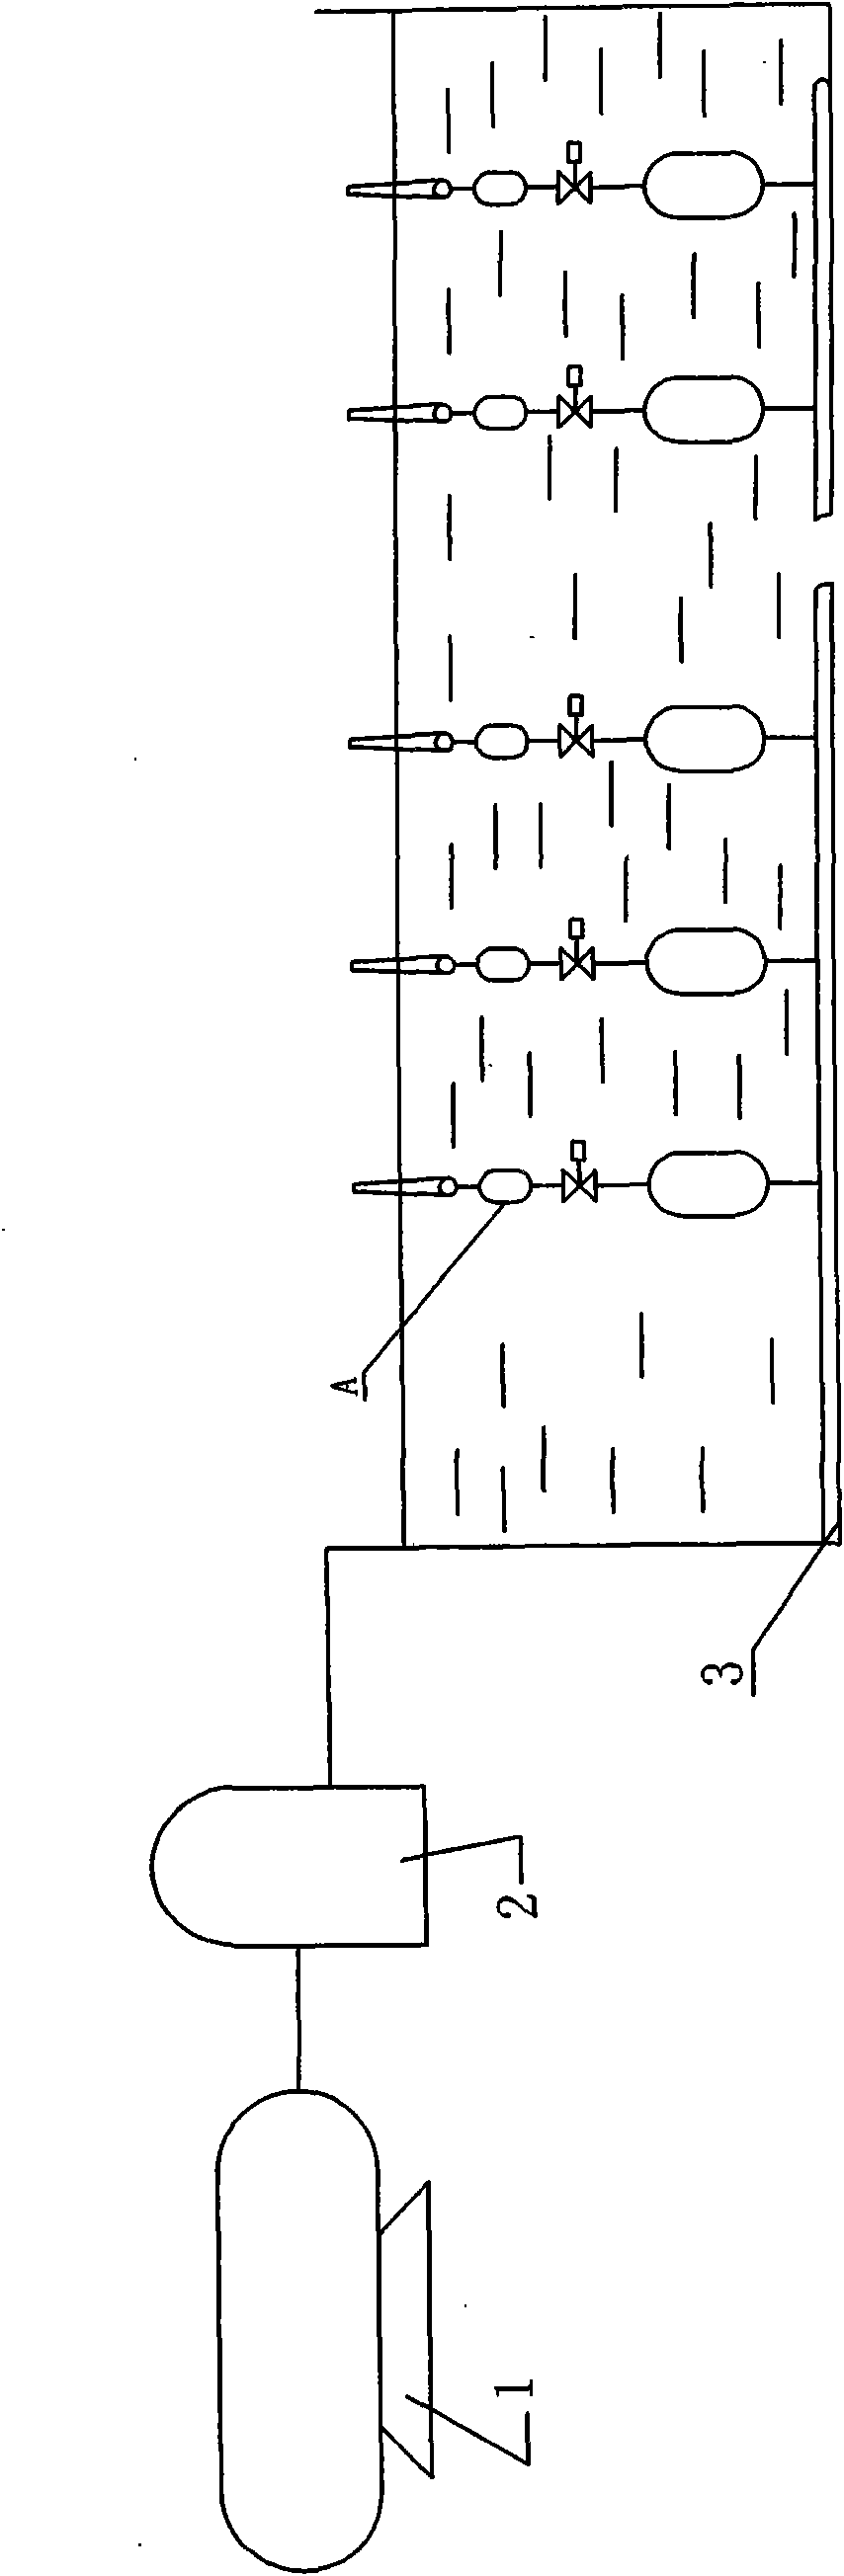 Numerical control air blast fountain and air blast method